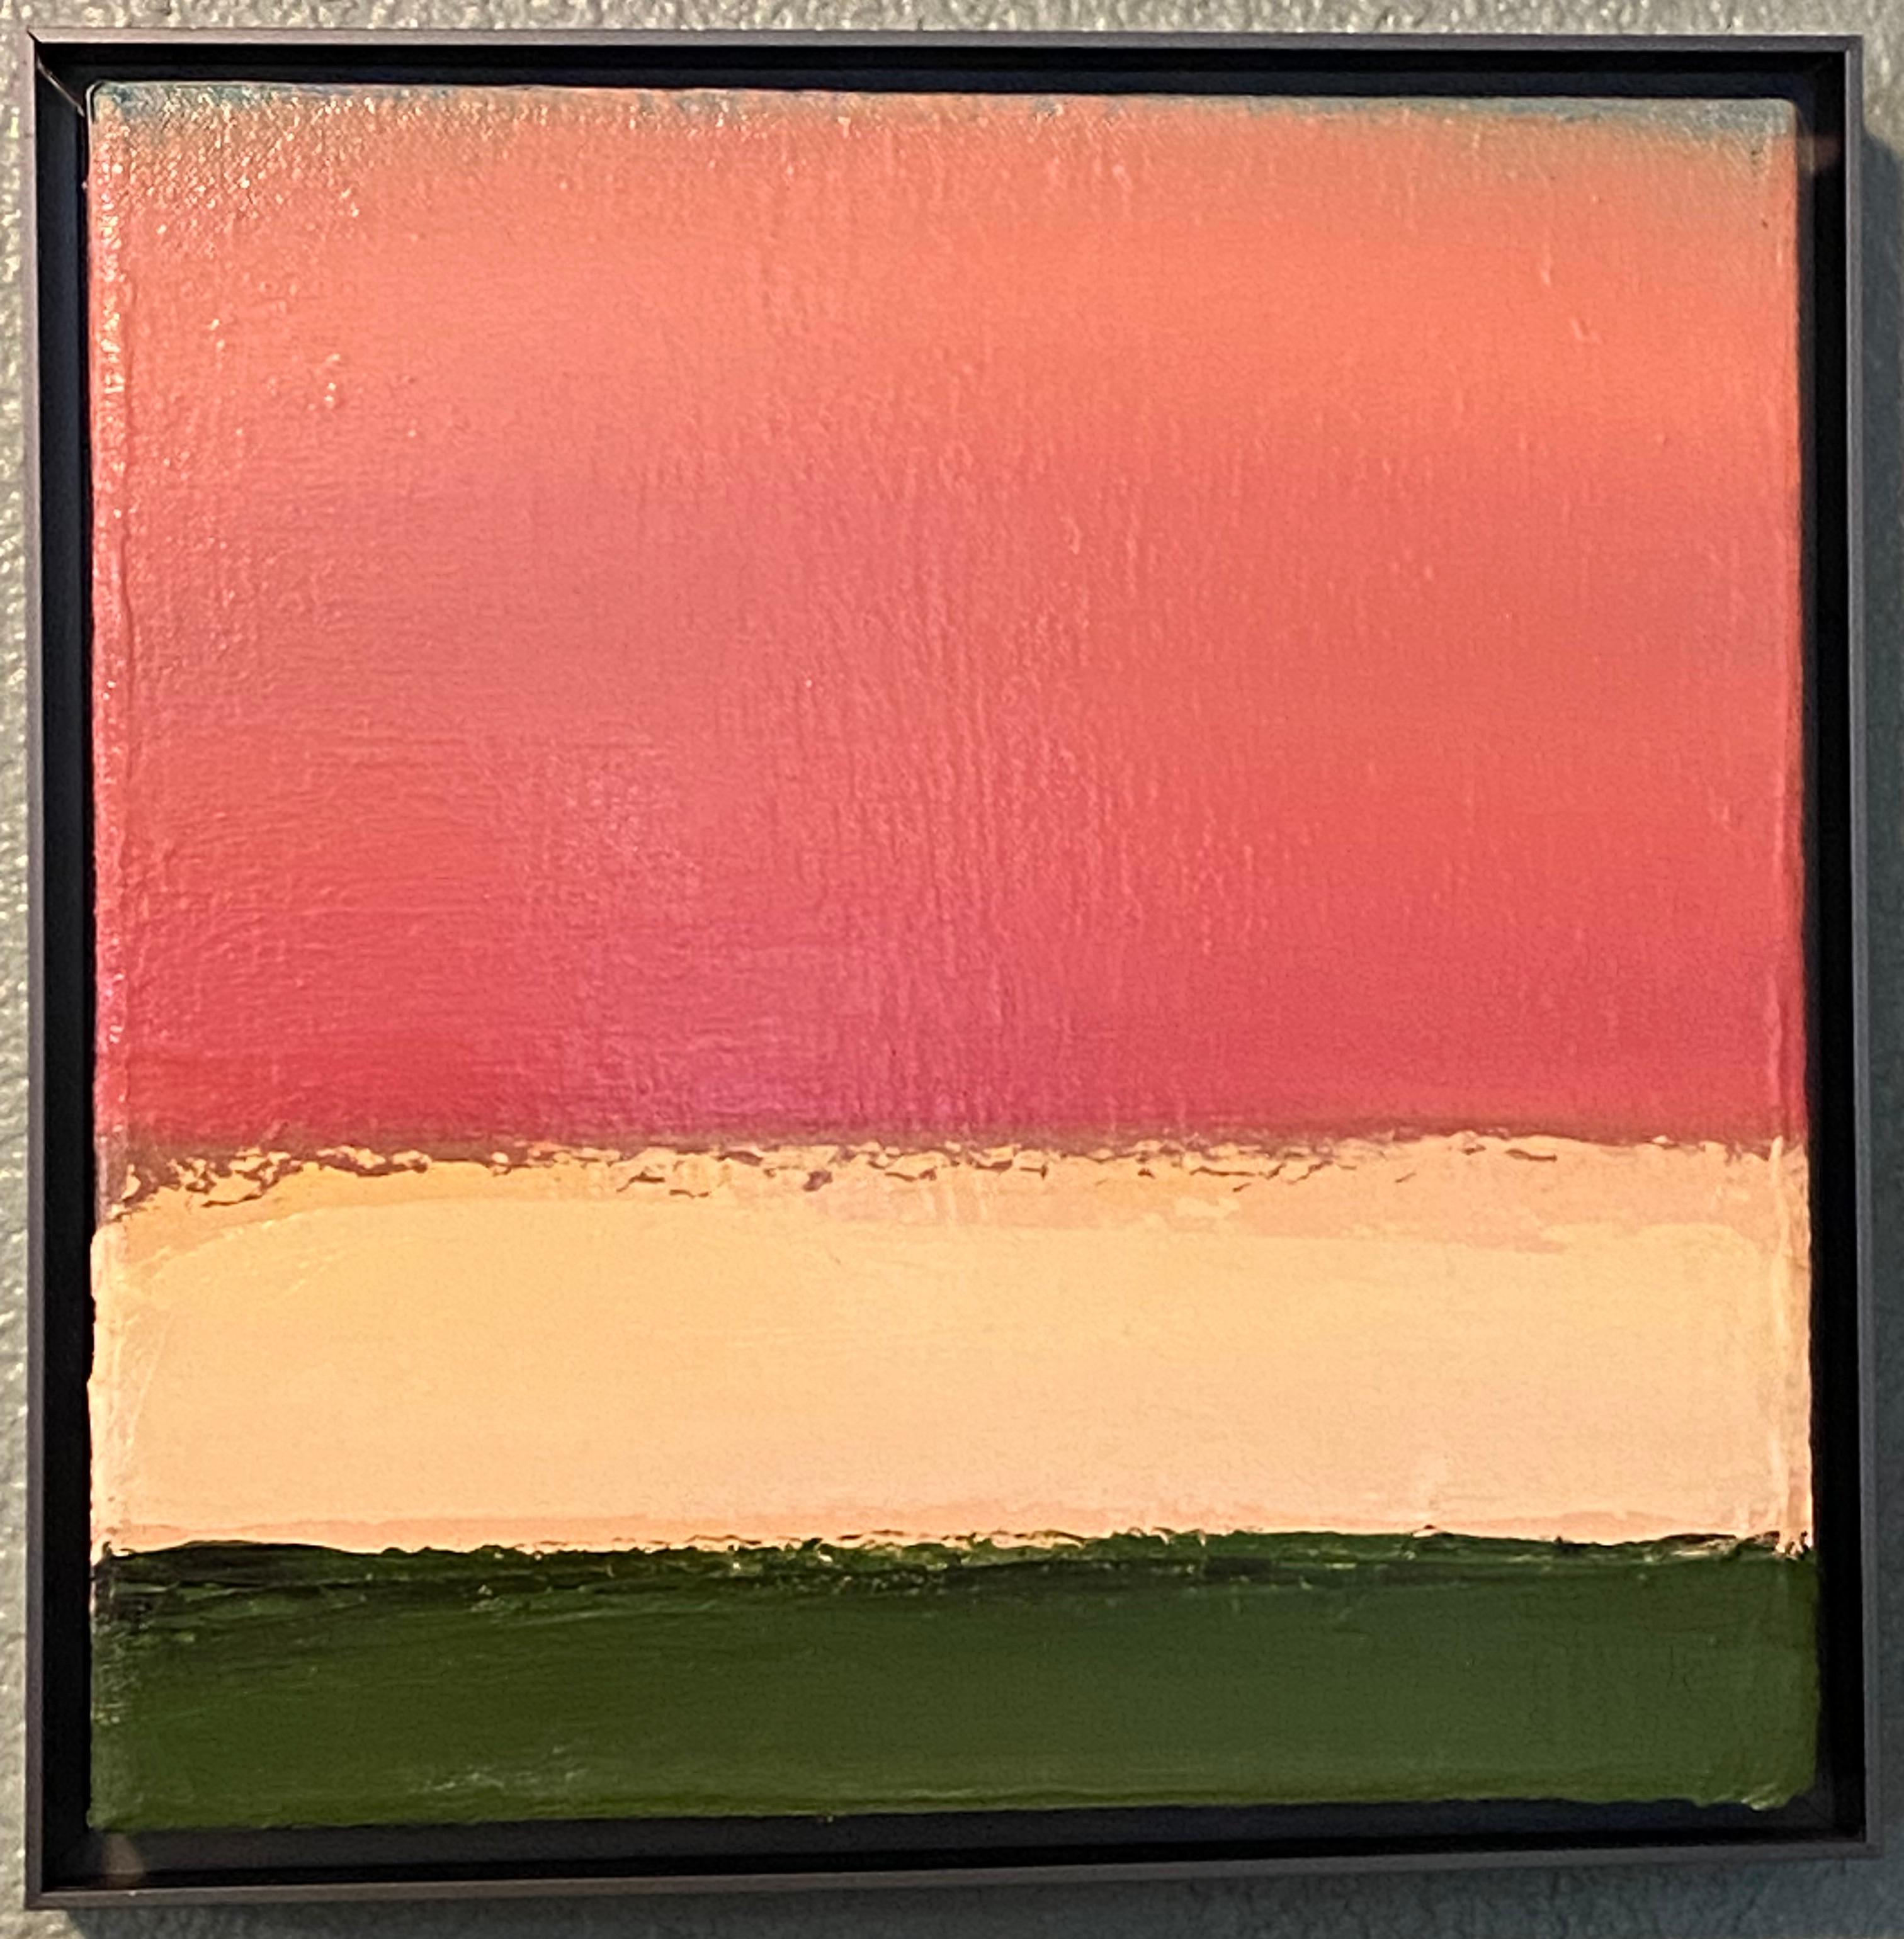 Alyson Kinkade Landscape Painting - Watermelon Sky, 12x12" oil on linen